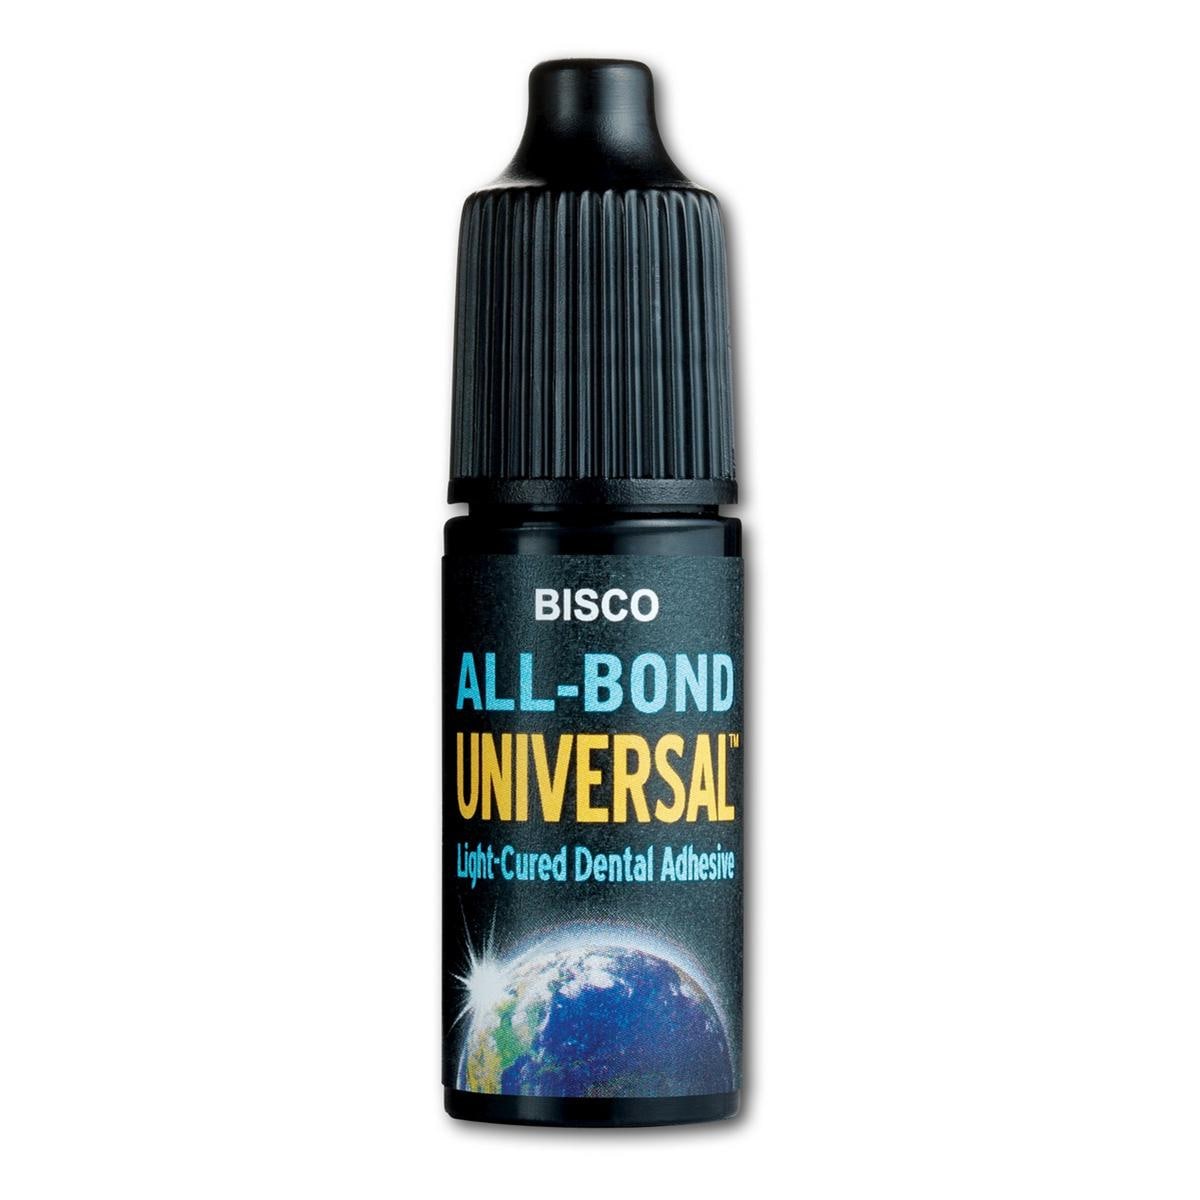 All-Bond Universal - Navulling, 6 ml